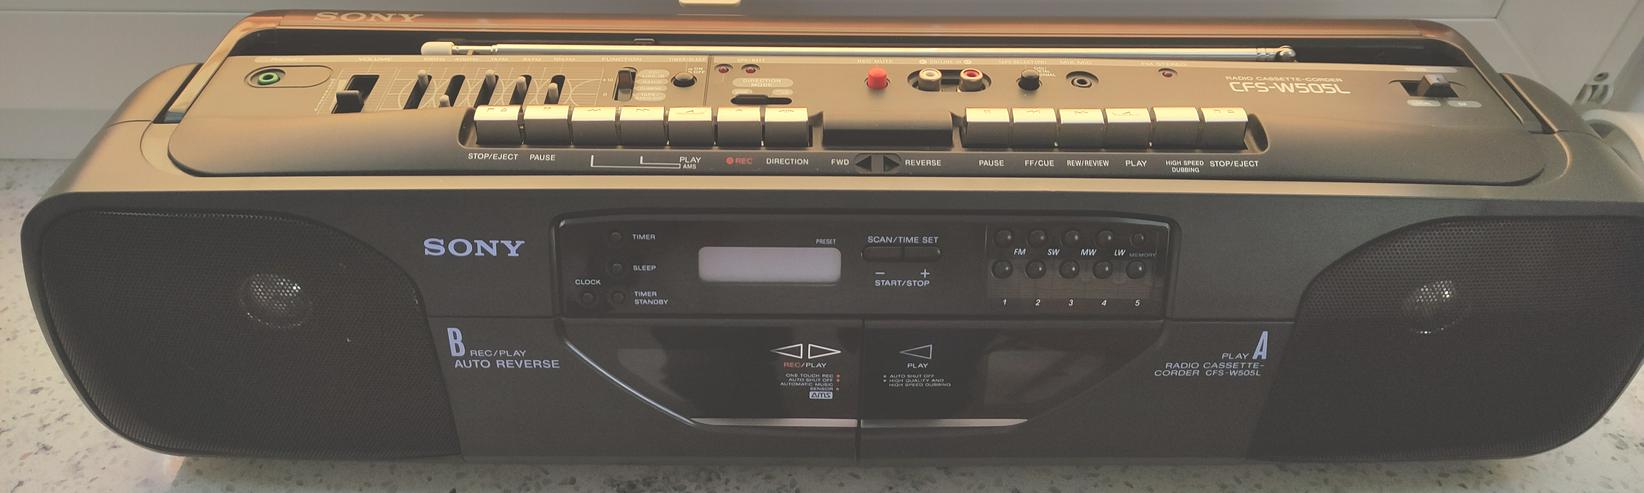 Radio-Doppel-Cassettenrekorder Sony